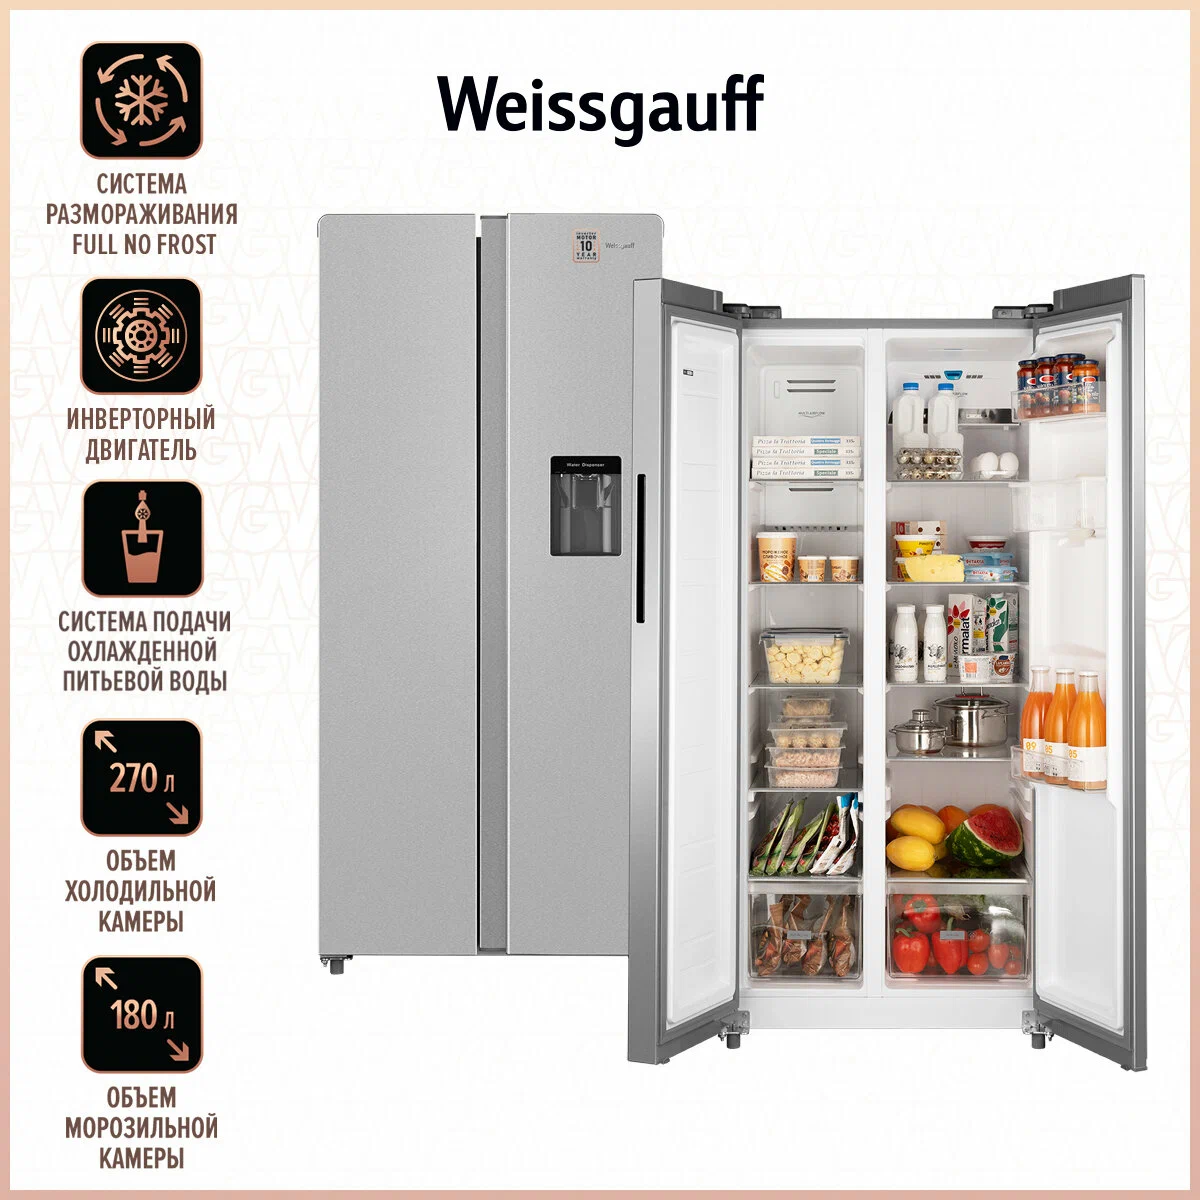 Холодильник Weissgauff WSBS 600 X серебристый холодильник weissgauff wsbs 695 nfx серебристый